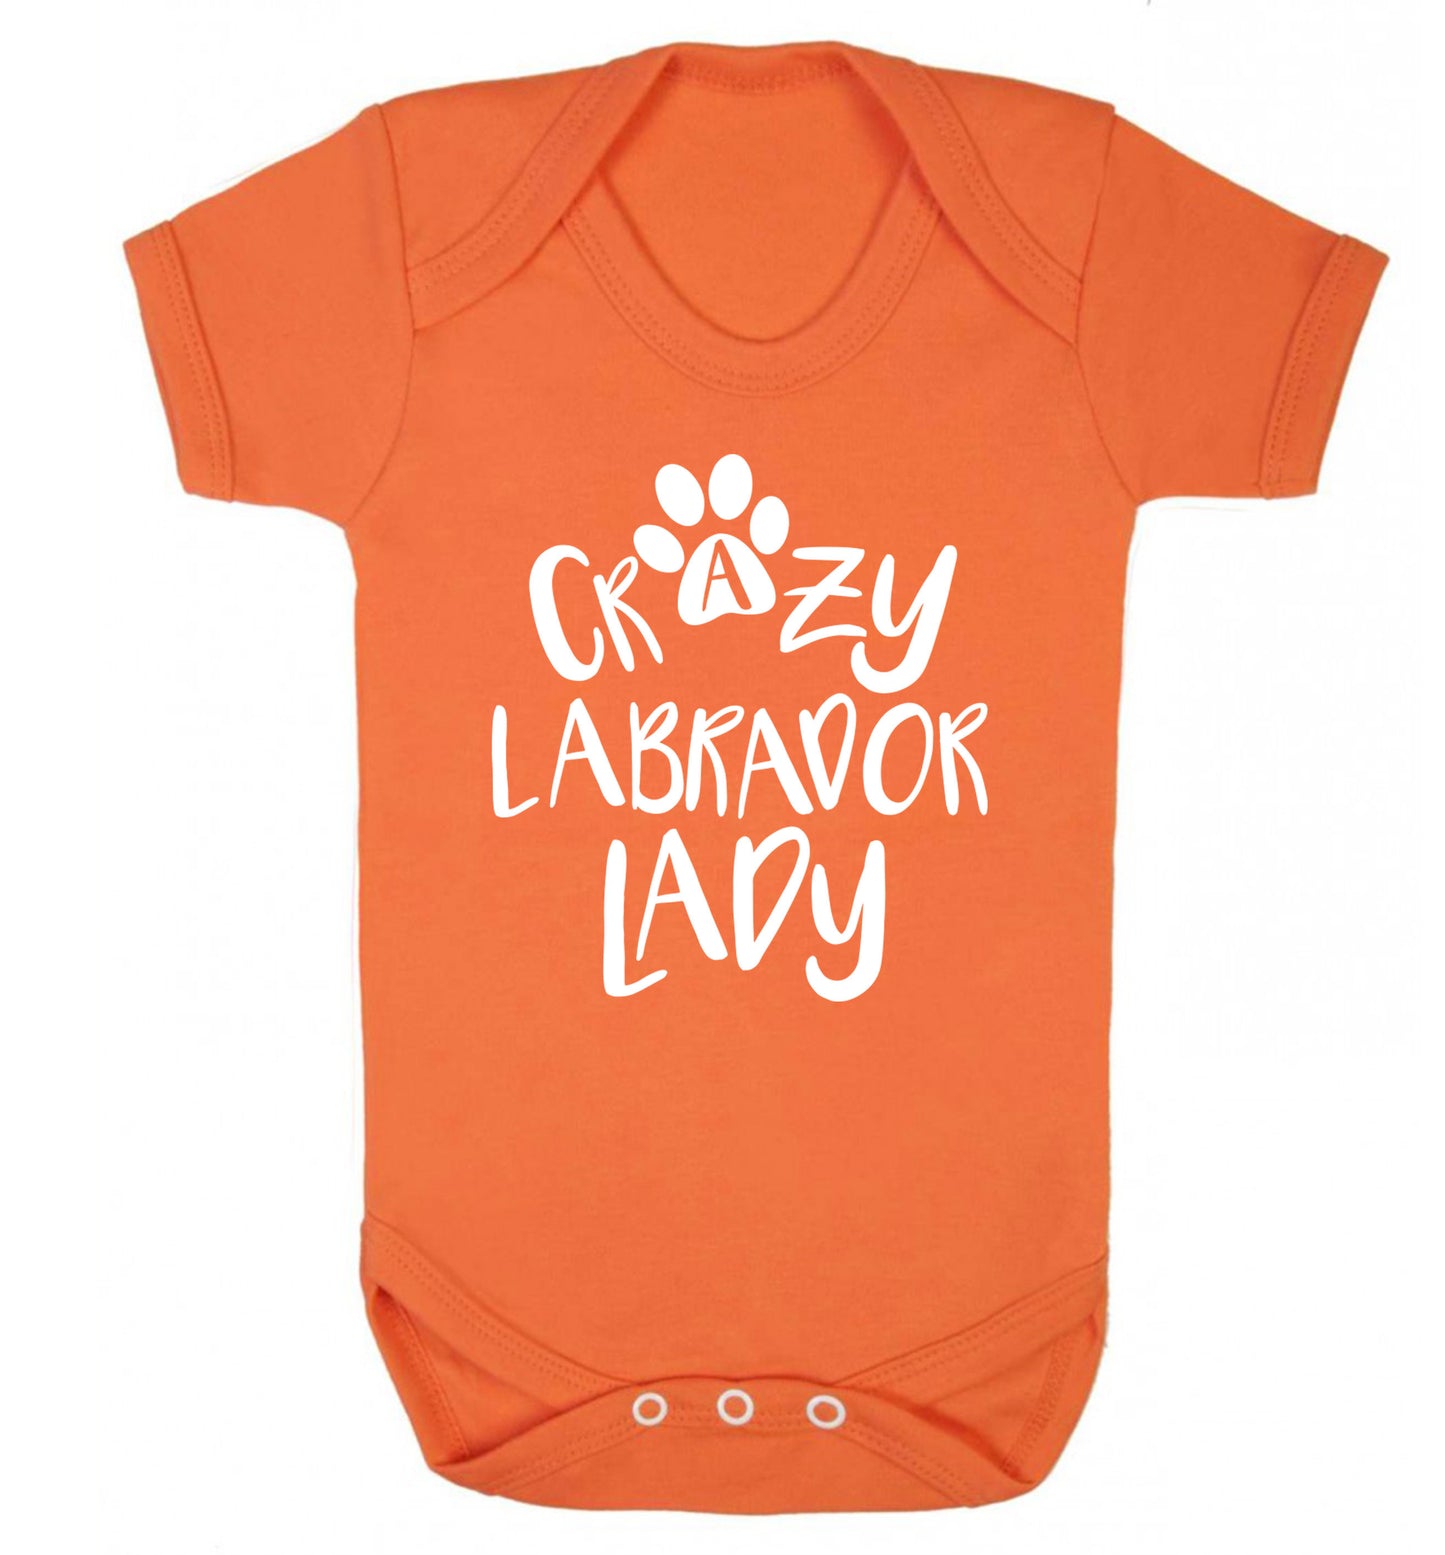 Crazy labrador lady Baby Vest orange 18-24 months